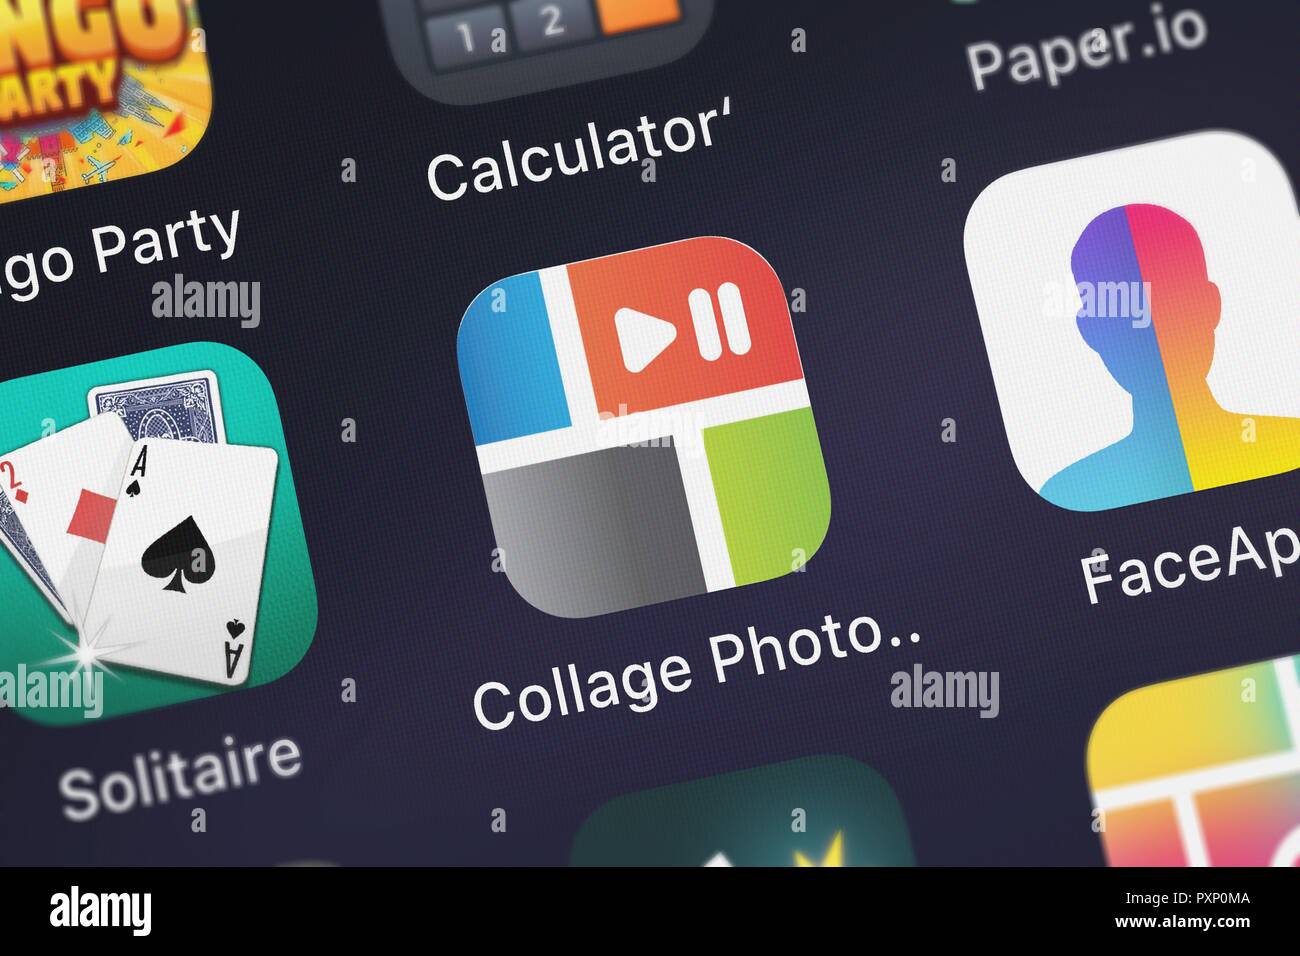 Paper.io 2 on the App Store